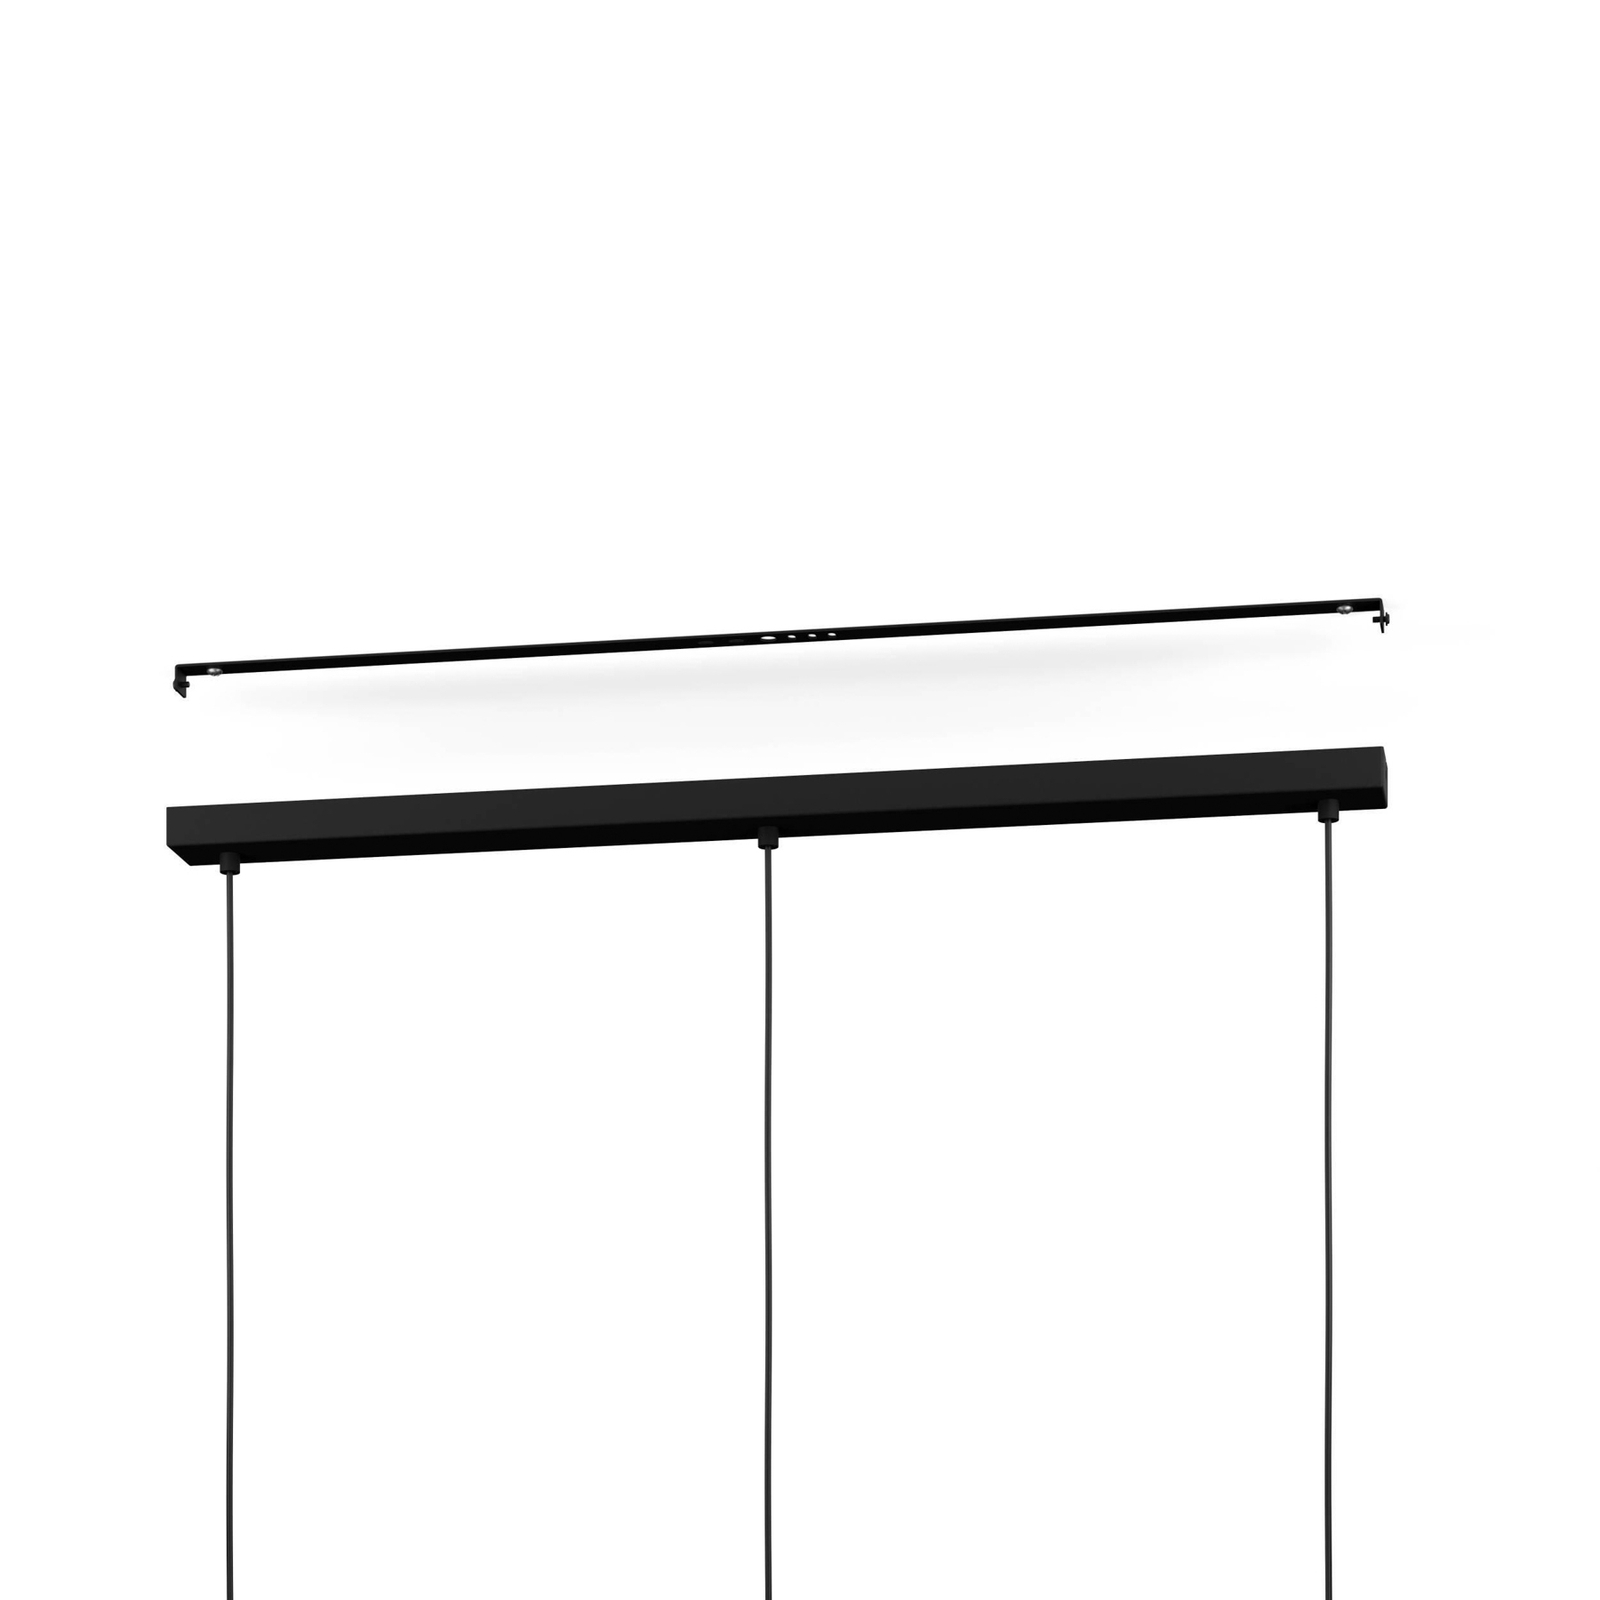 Matlock pendant light, length 90 cm, grey/black, 3-bulb.